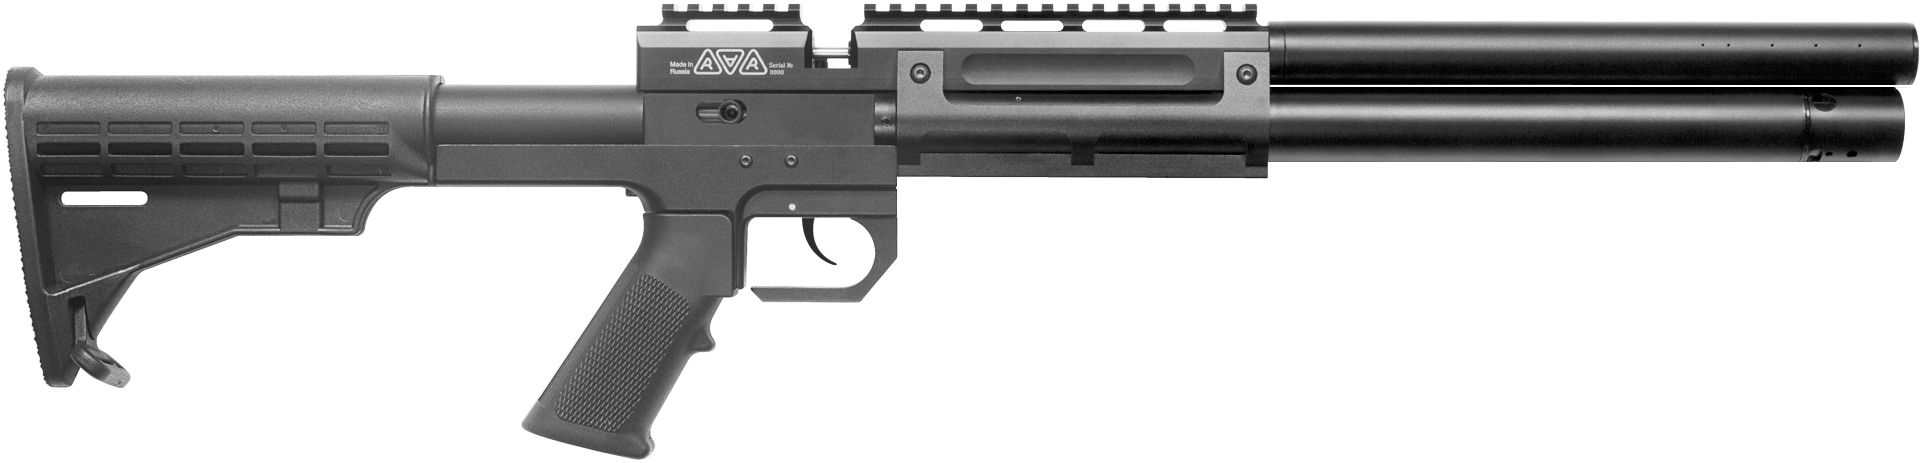 RAR VL-12 Carbine